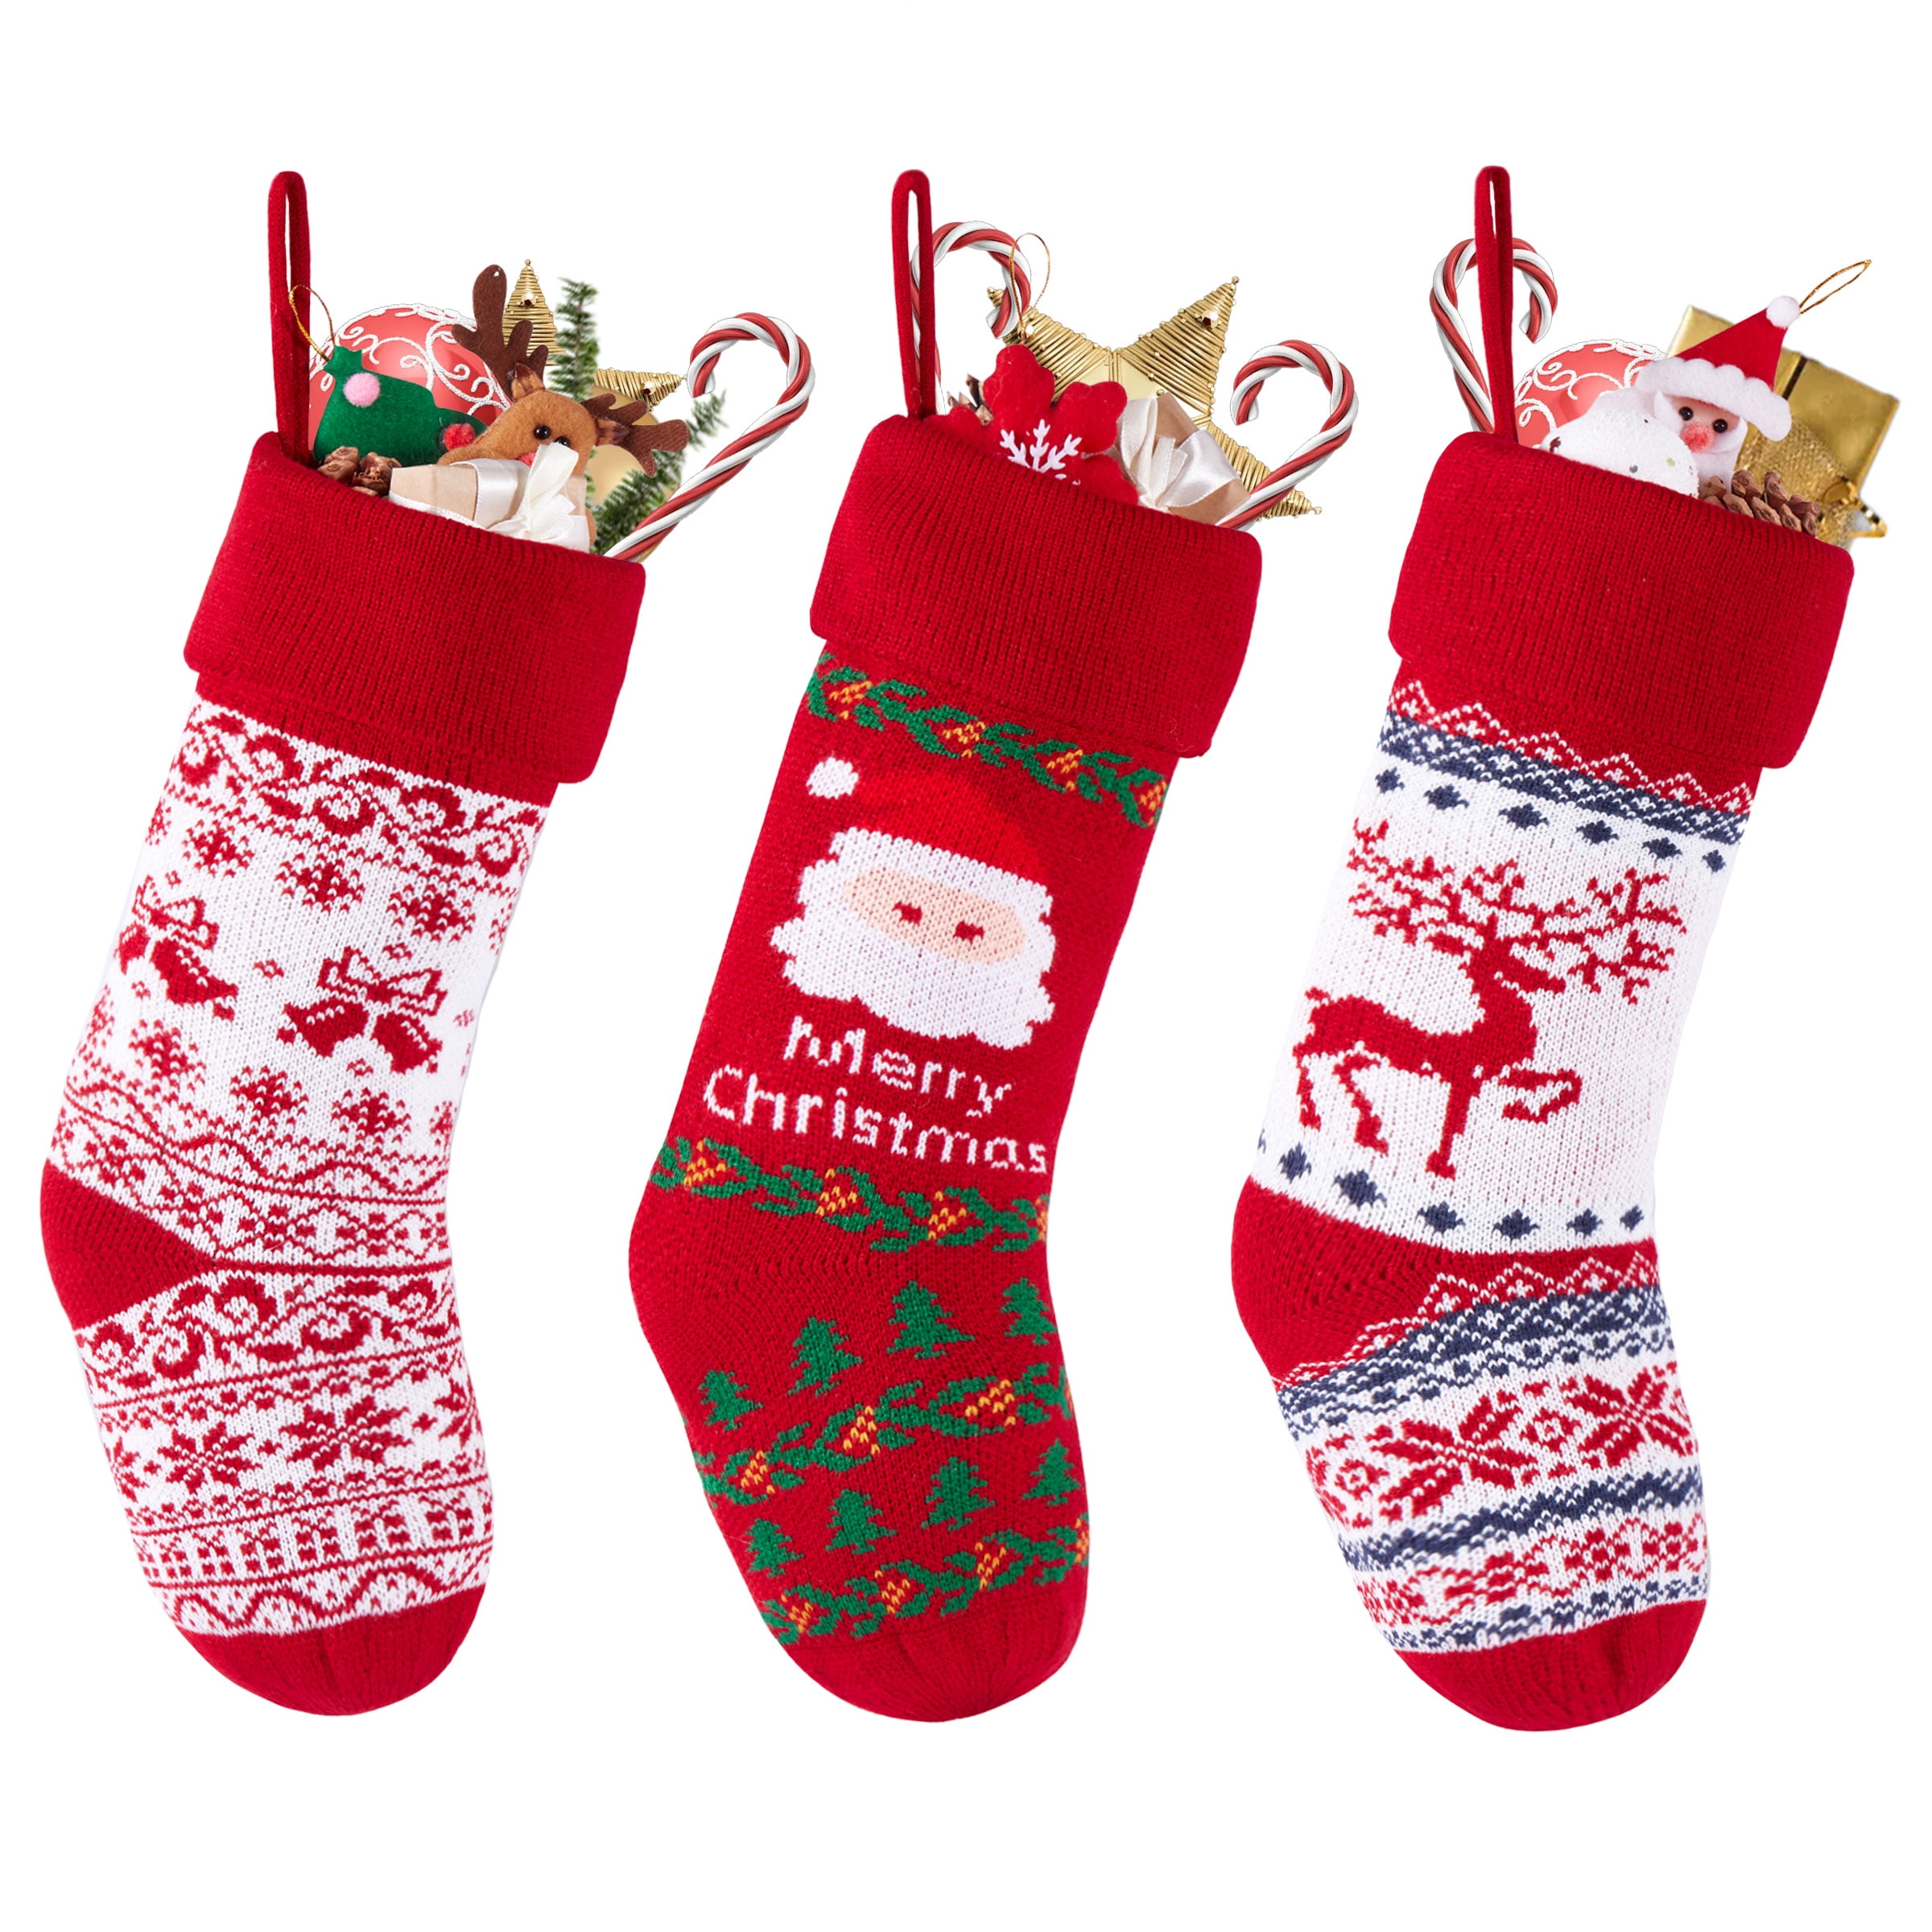 1PCS Christmas Stockings 18 inch Xmas Stocking Party Mantel Decoration Ornaments 